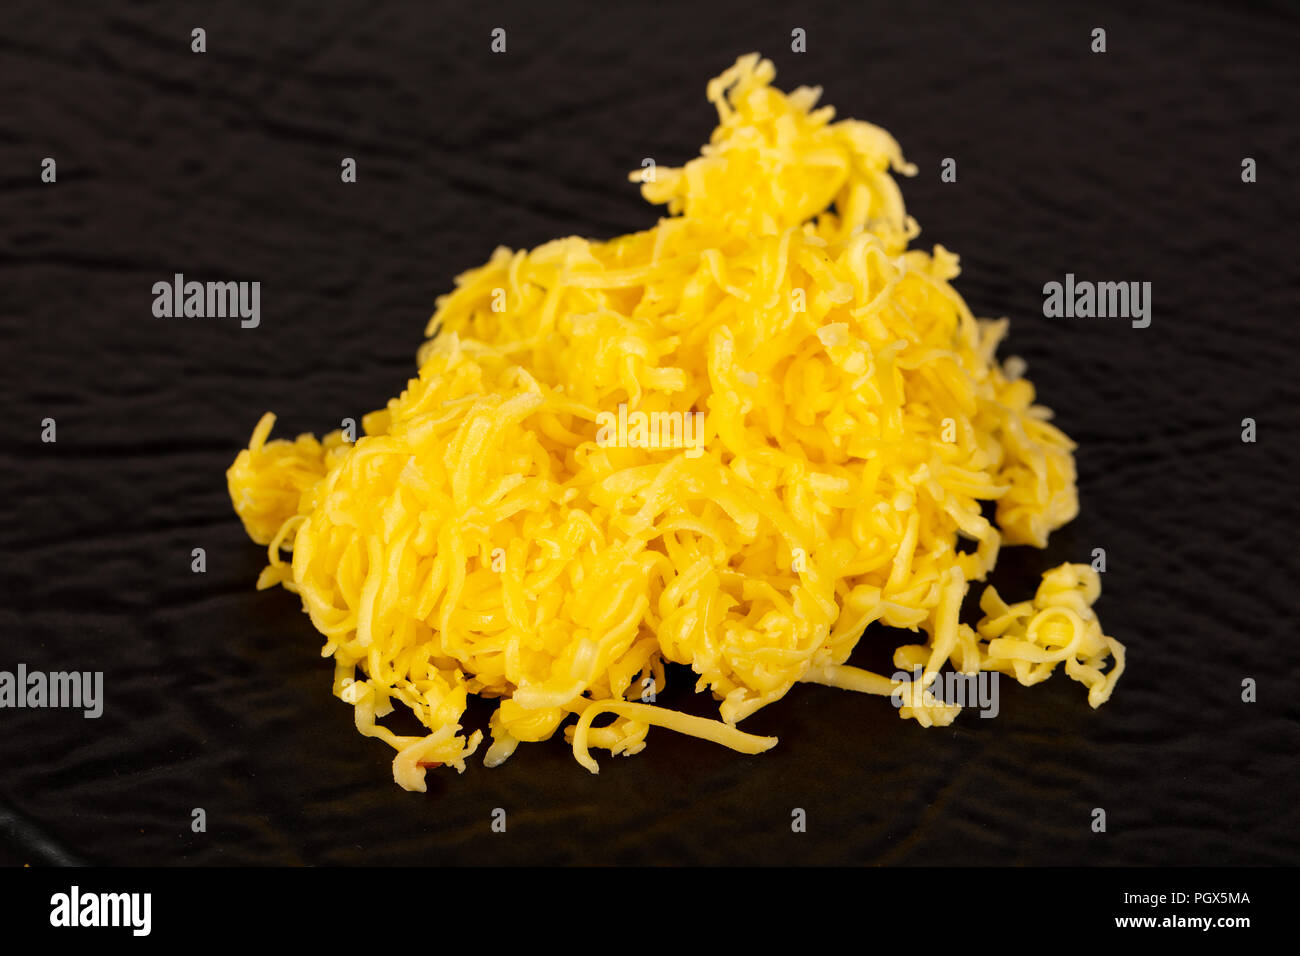 https://c8.alamy.com/comp/PGX5MA/shredded-yellow-cheese-topping-heap-PGX5MA.jpg